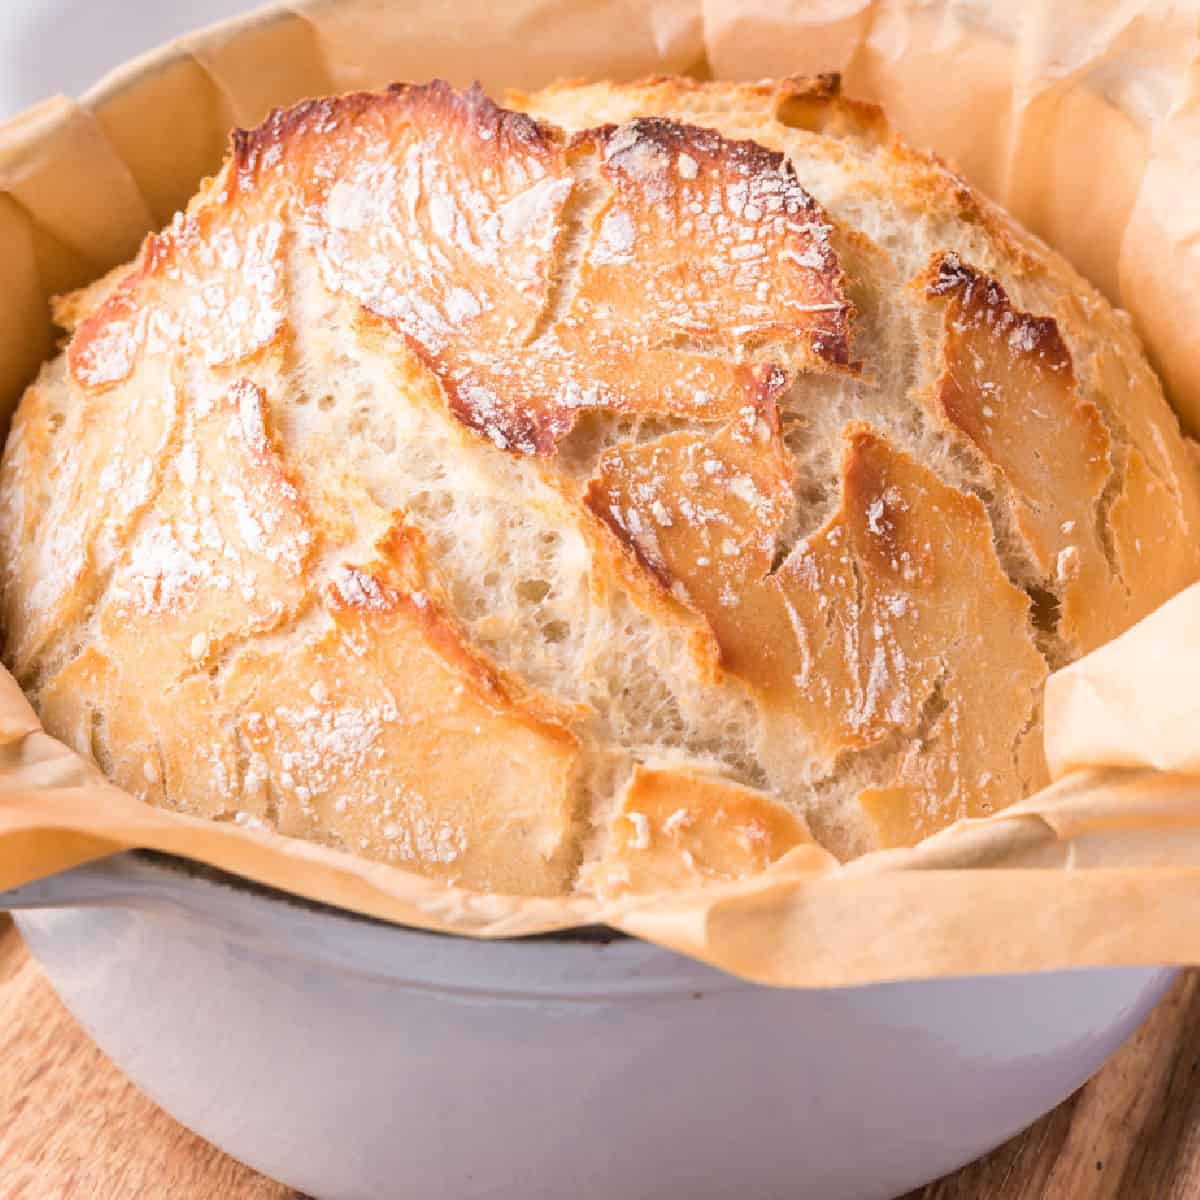 https://realhousemoms.com/wp-content/uploads/Dutch-Oven-Bread-RECIPE-CARD.jpg